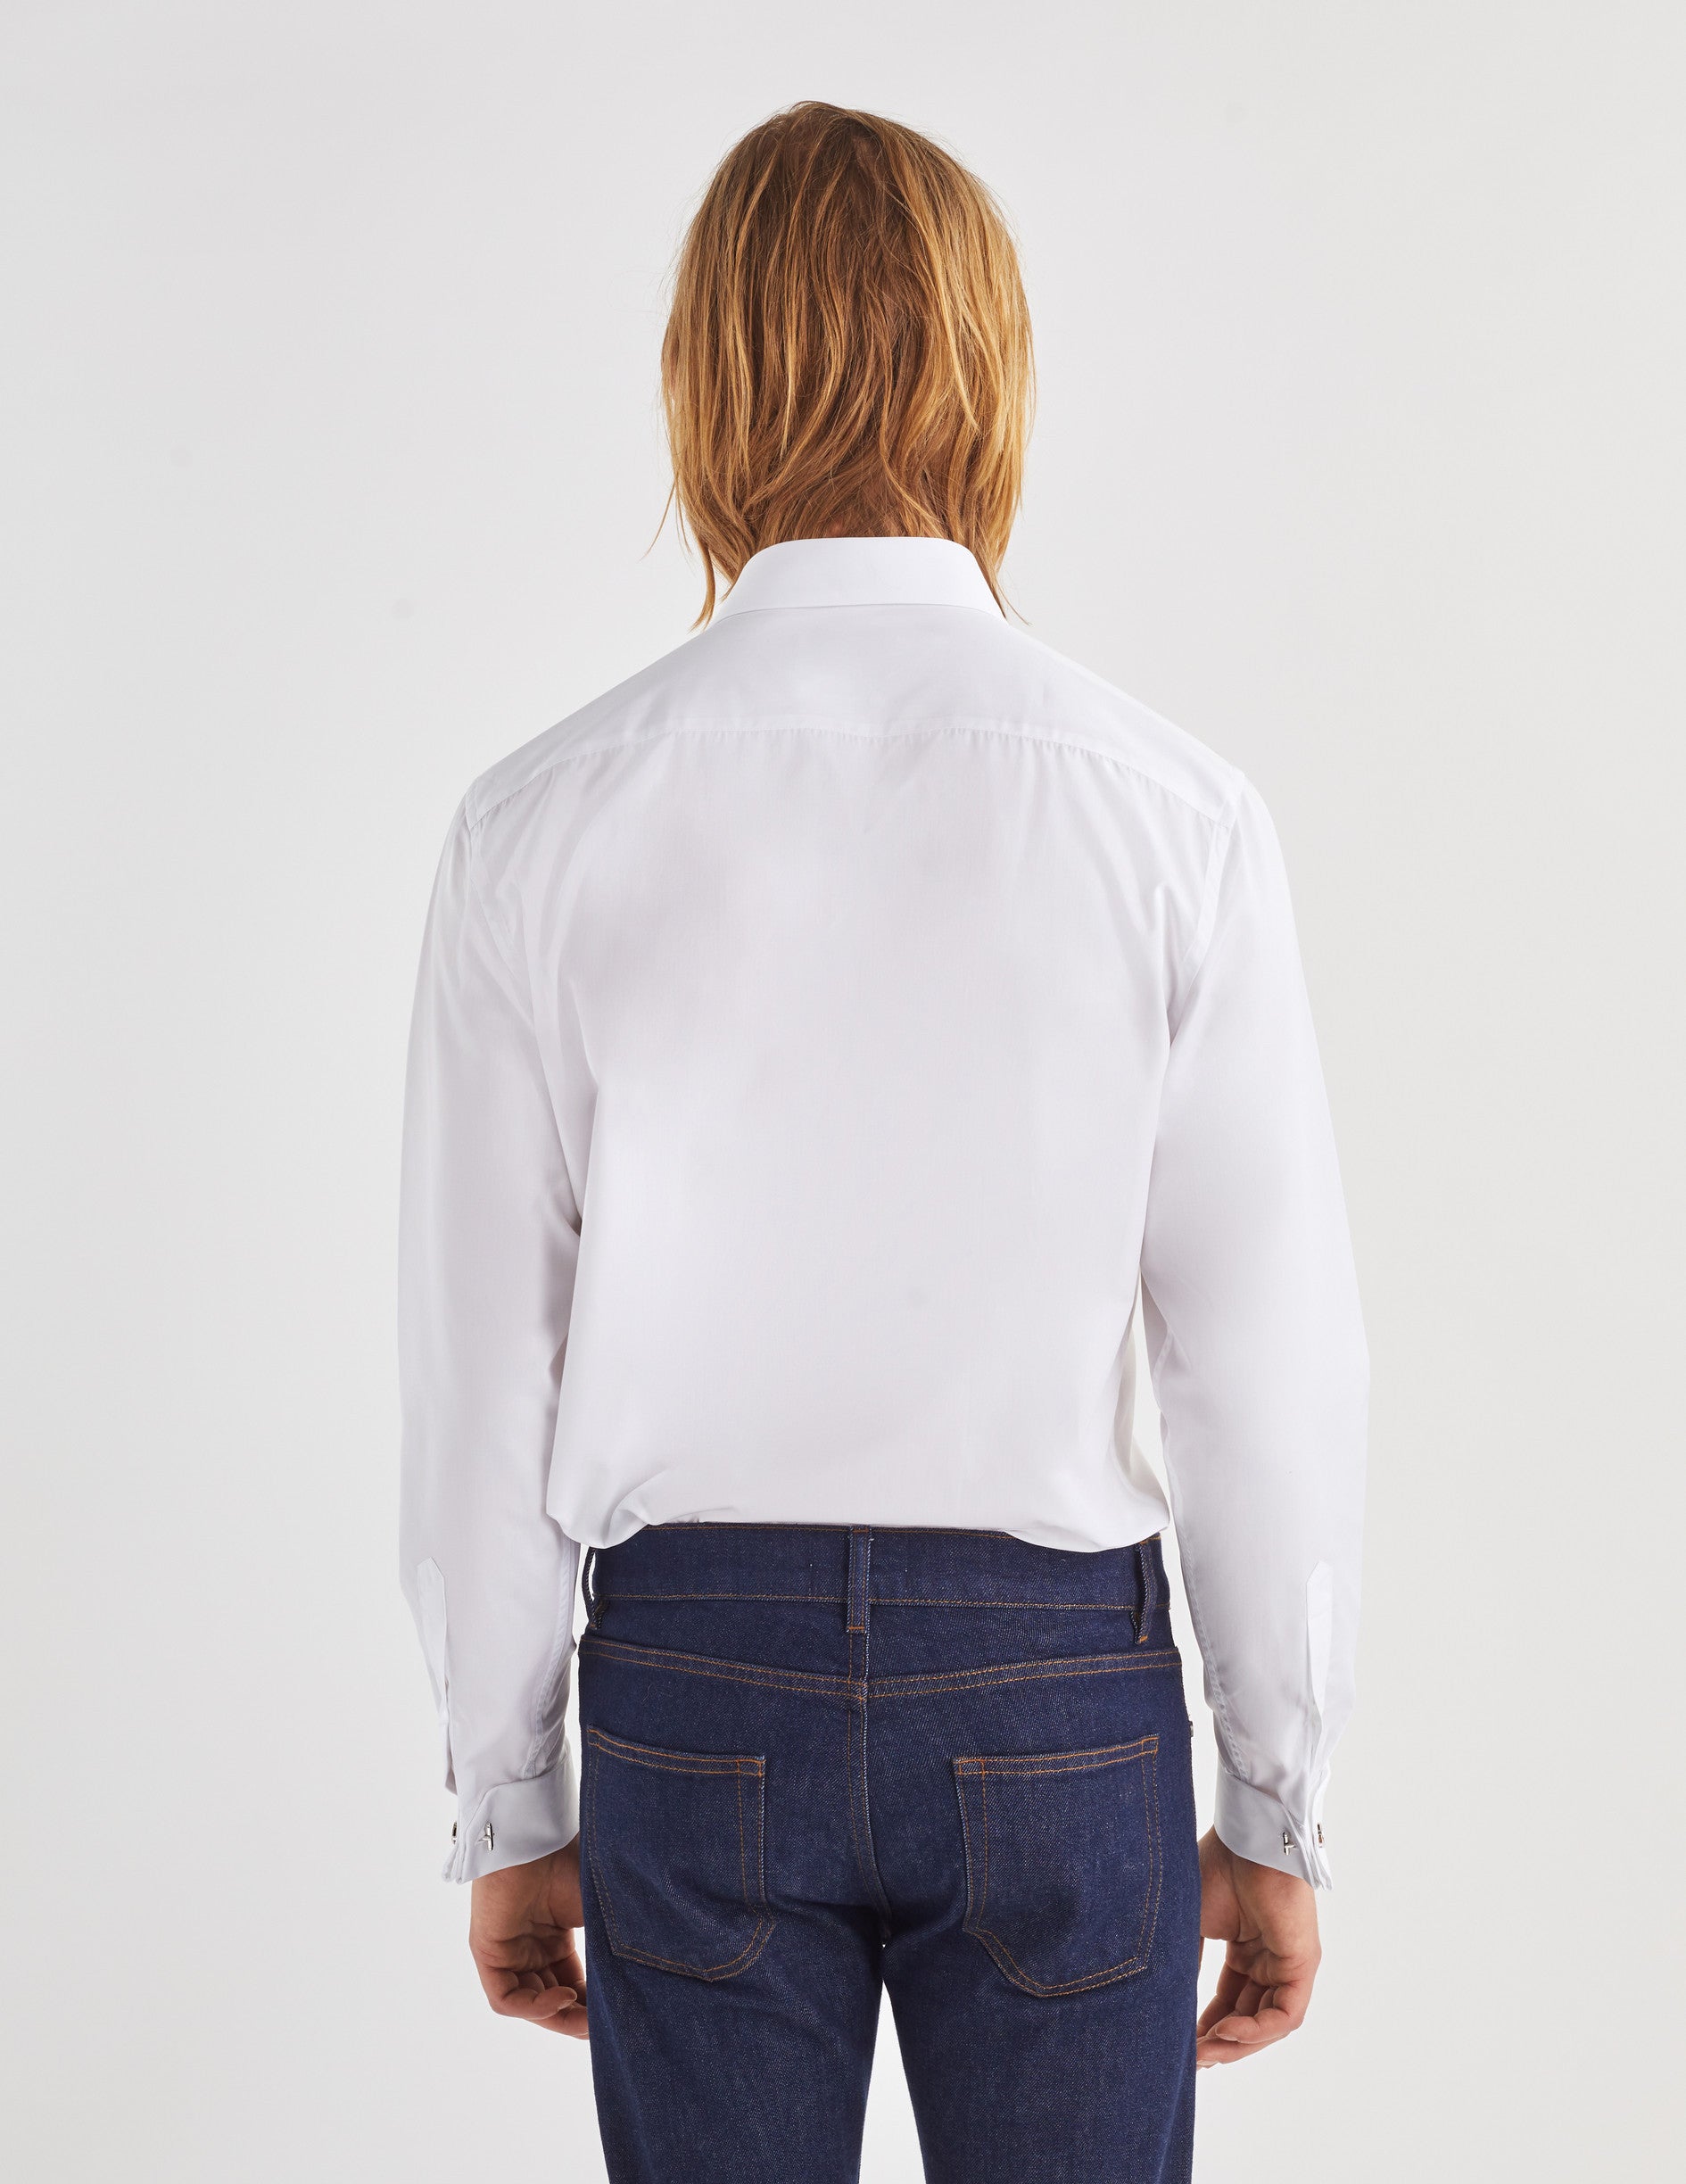 Semi-fitted white shirt - Poplin - Italian Collar - French Cuffs